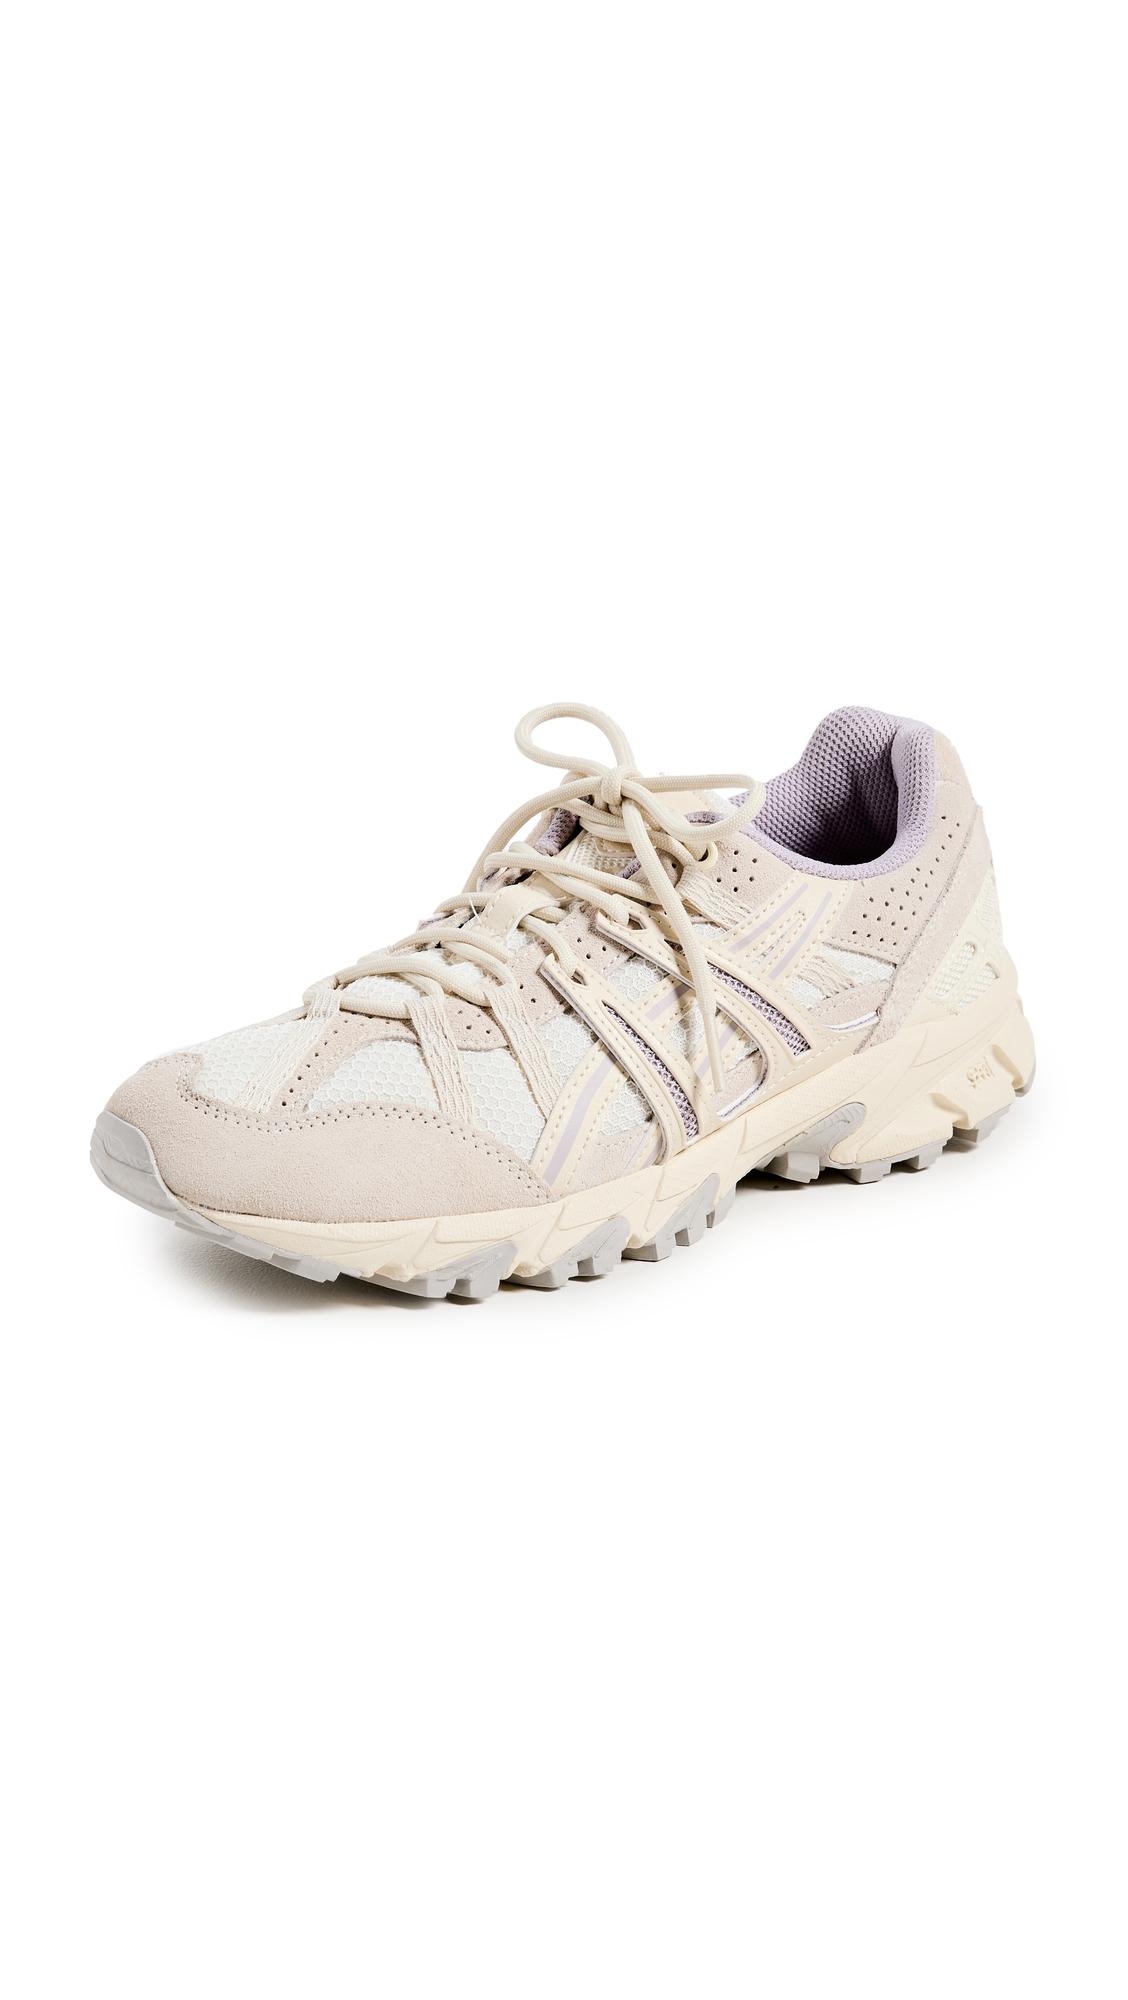 Asics Gel-sonoma 15-50 Sneakers in White | Lyst